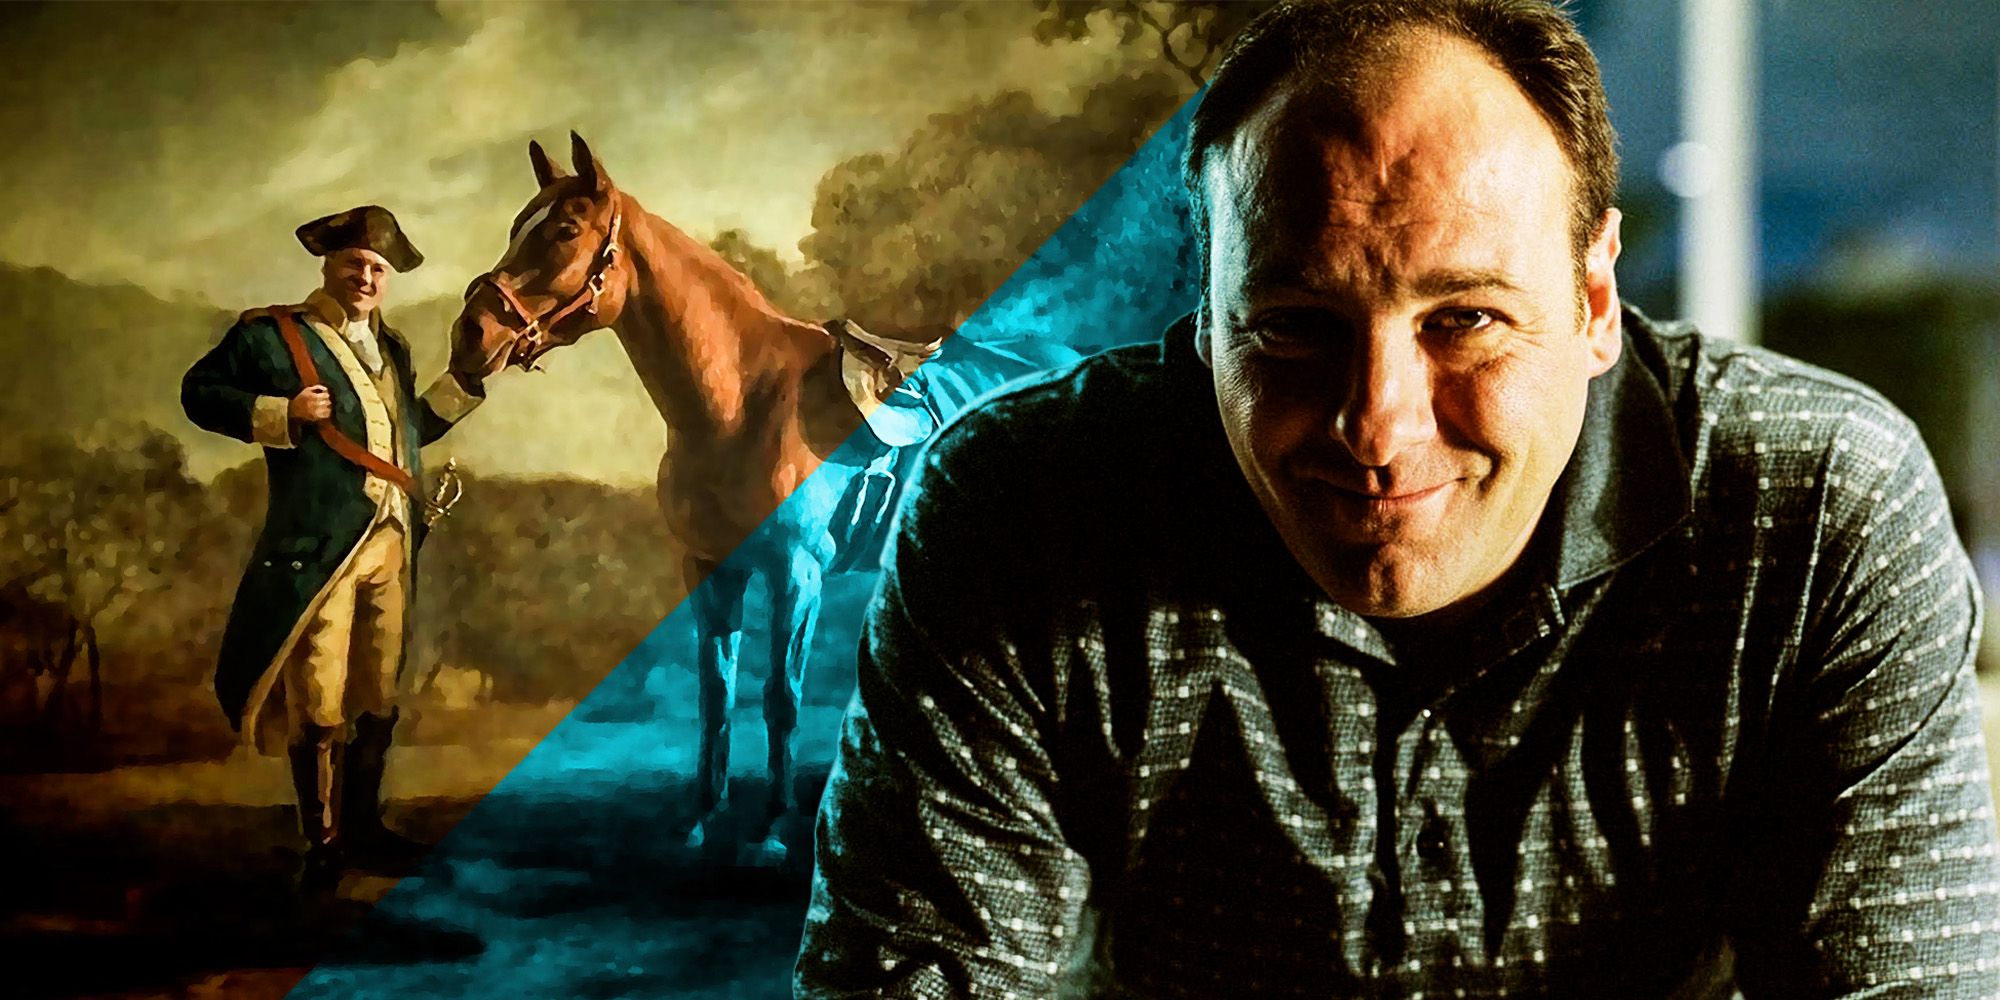 The Sopranos Tonys PieOMy Horse Painting History & Meaning Explained